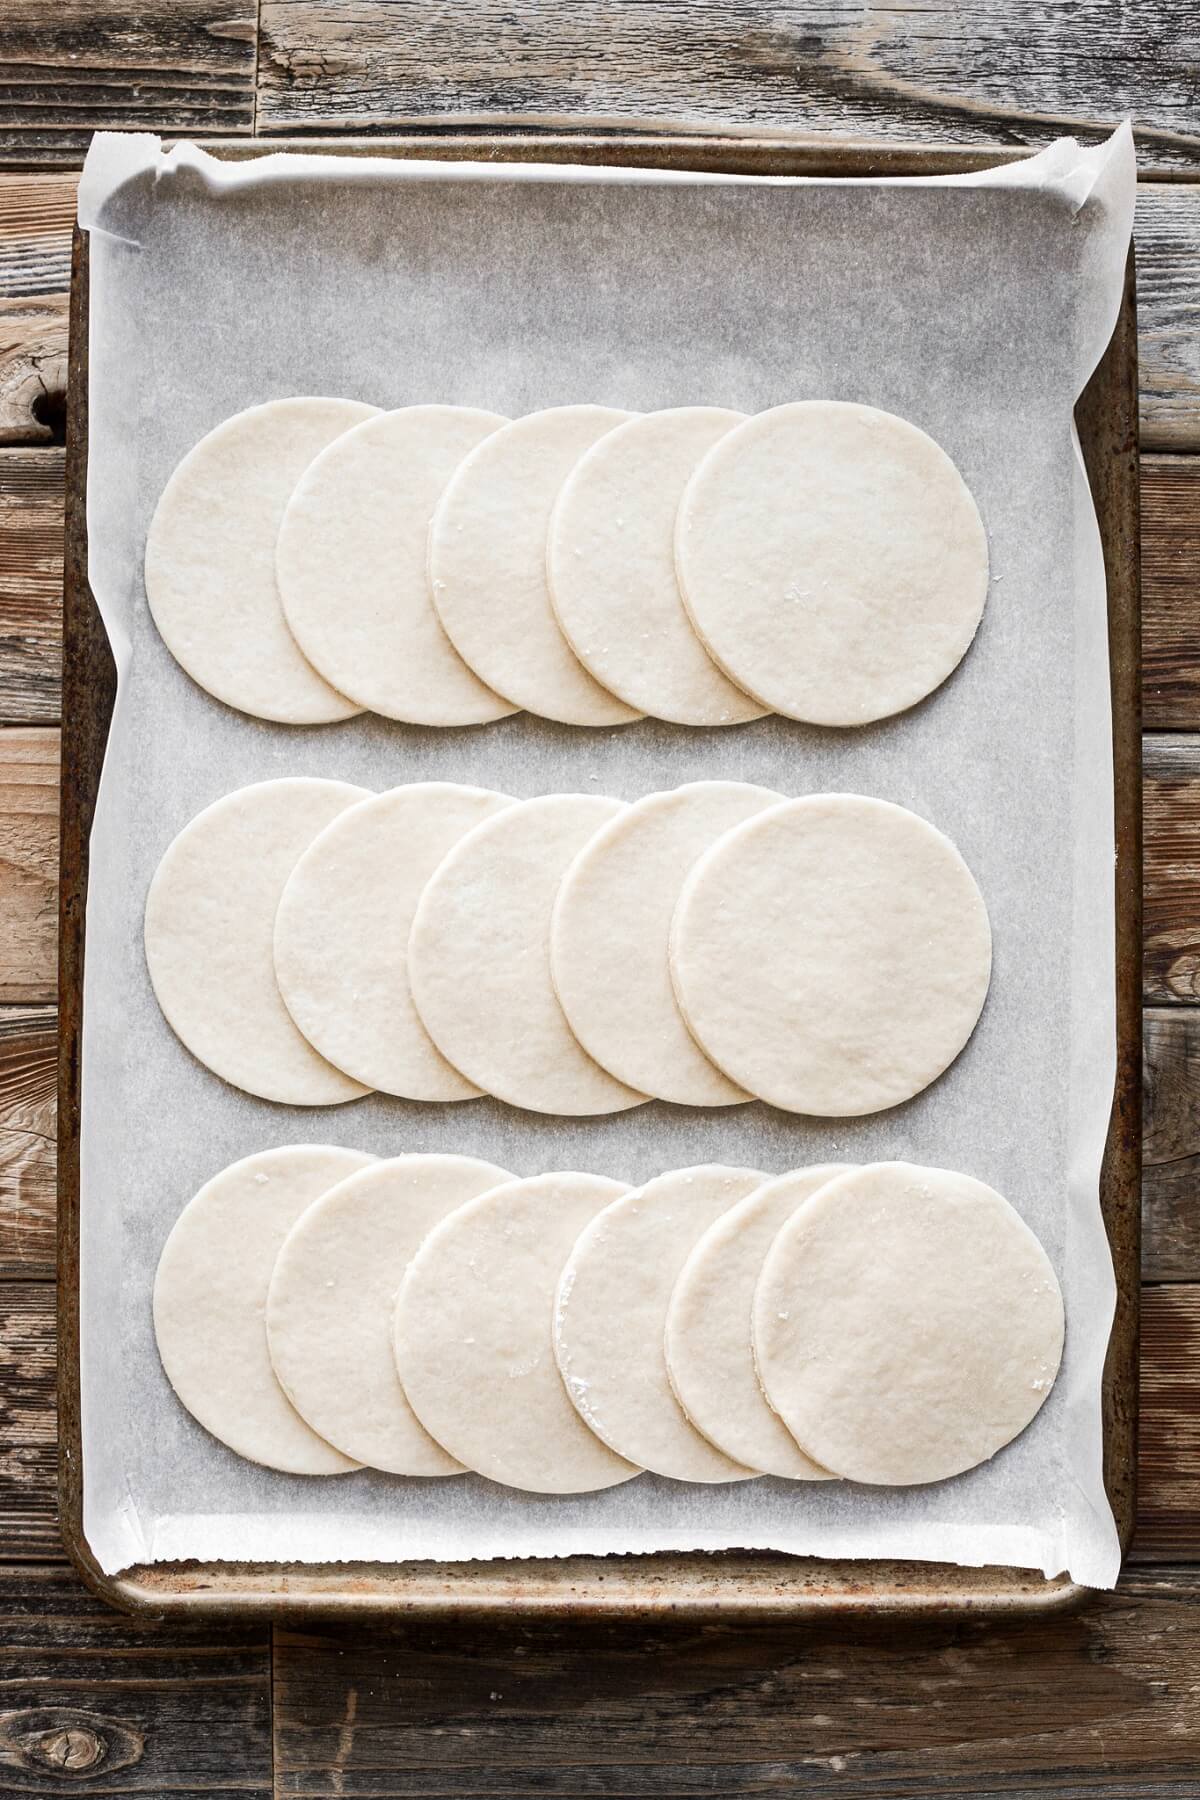 Pie dough cut into circles.